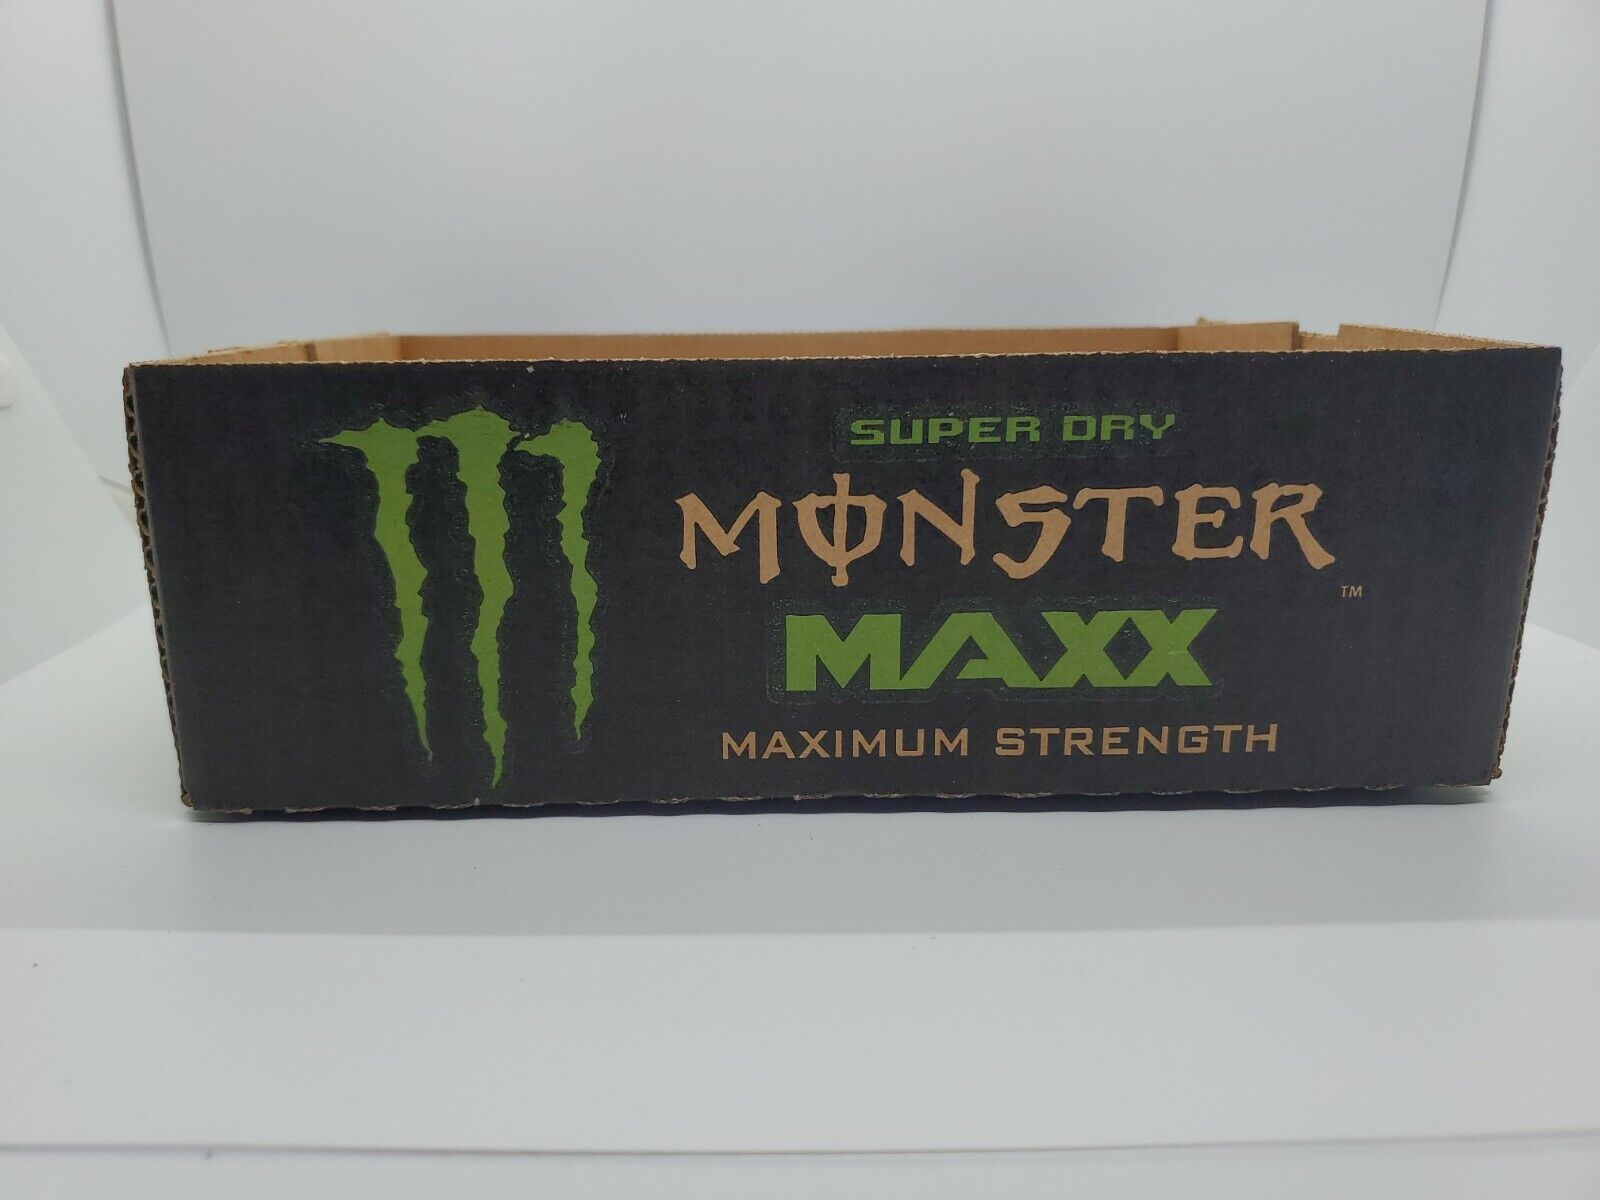 Monster Maxx Super Dry Maximum Strength Energy Drink 12 pk Box Discontinue EMPTY